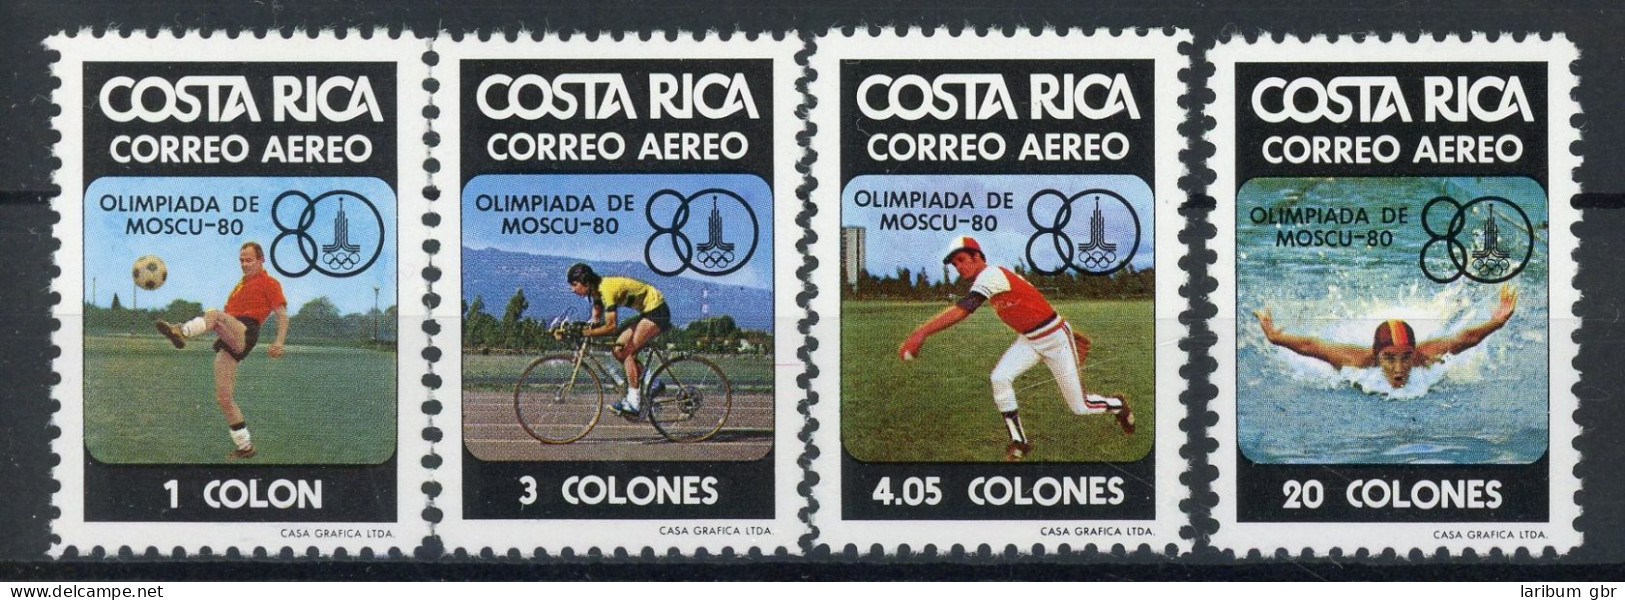 Costa Rica 1065-1068 Postfrisch Olympia 1980 Moskau #JR915 - Costa Rica